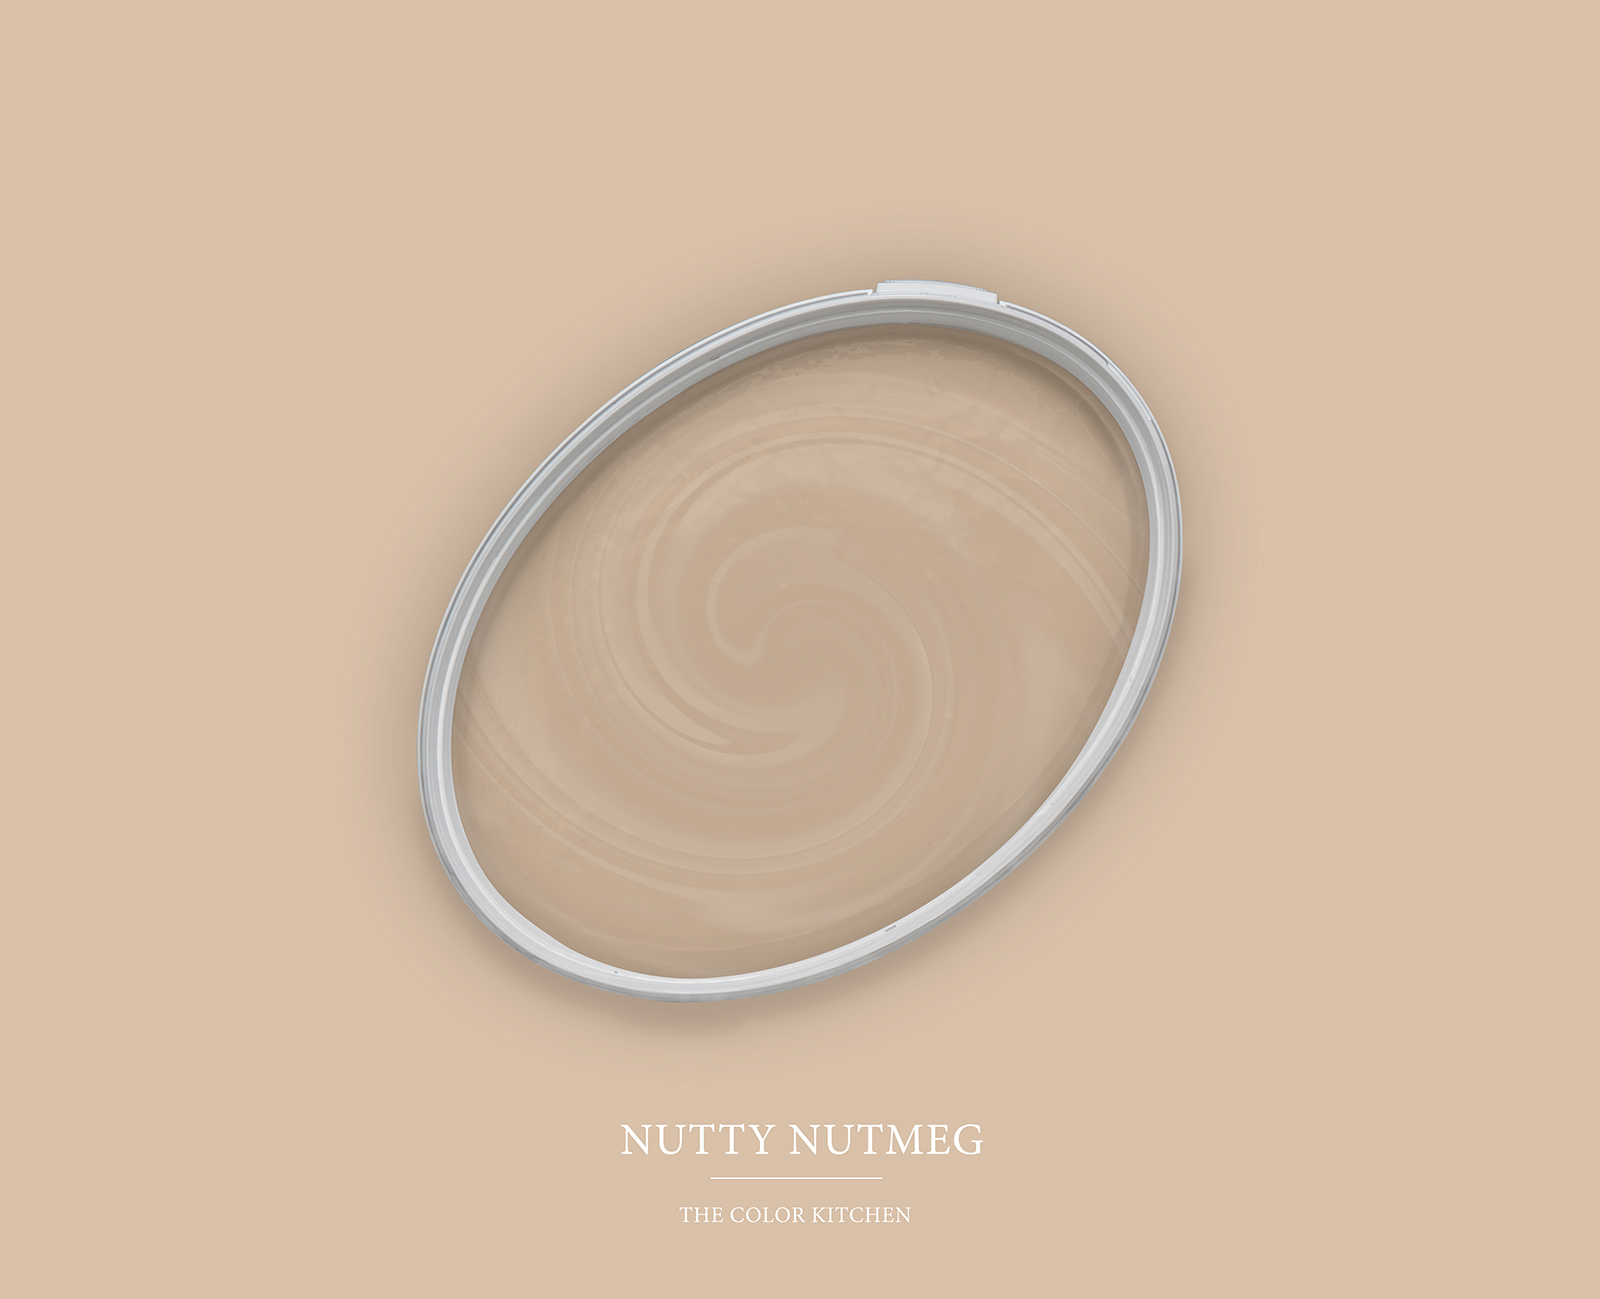         Wandfarbe in warmem Beige »Nutty Nutmeg« TCK6009 – 2,5 Liter
    